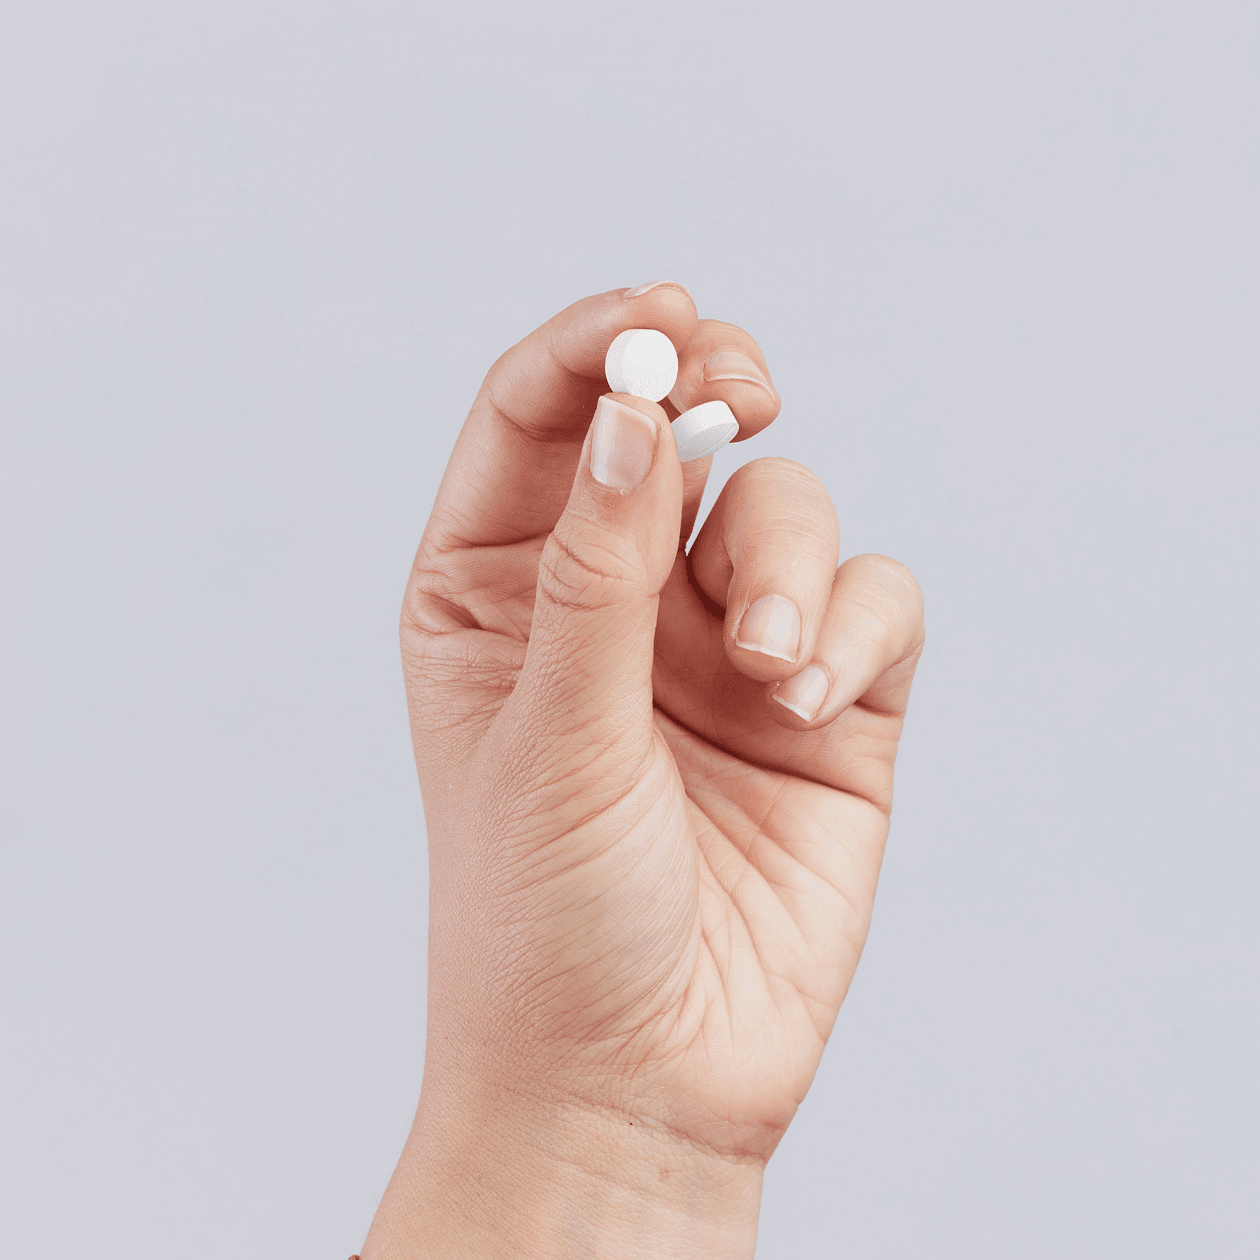 Hand holding two pills of Sulfamethoxazole-Trimethoprim.